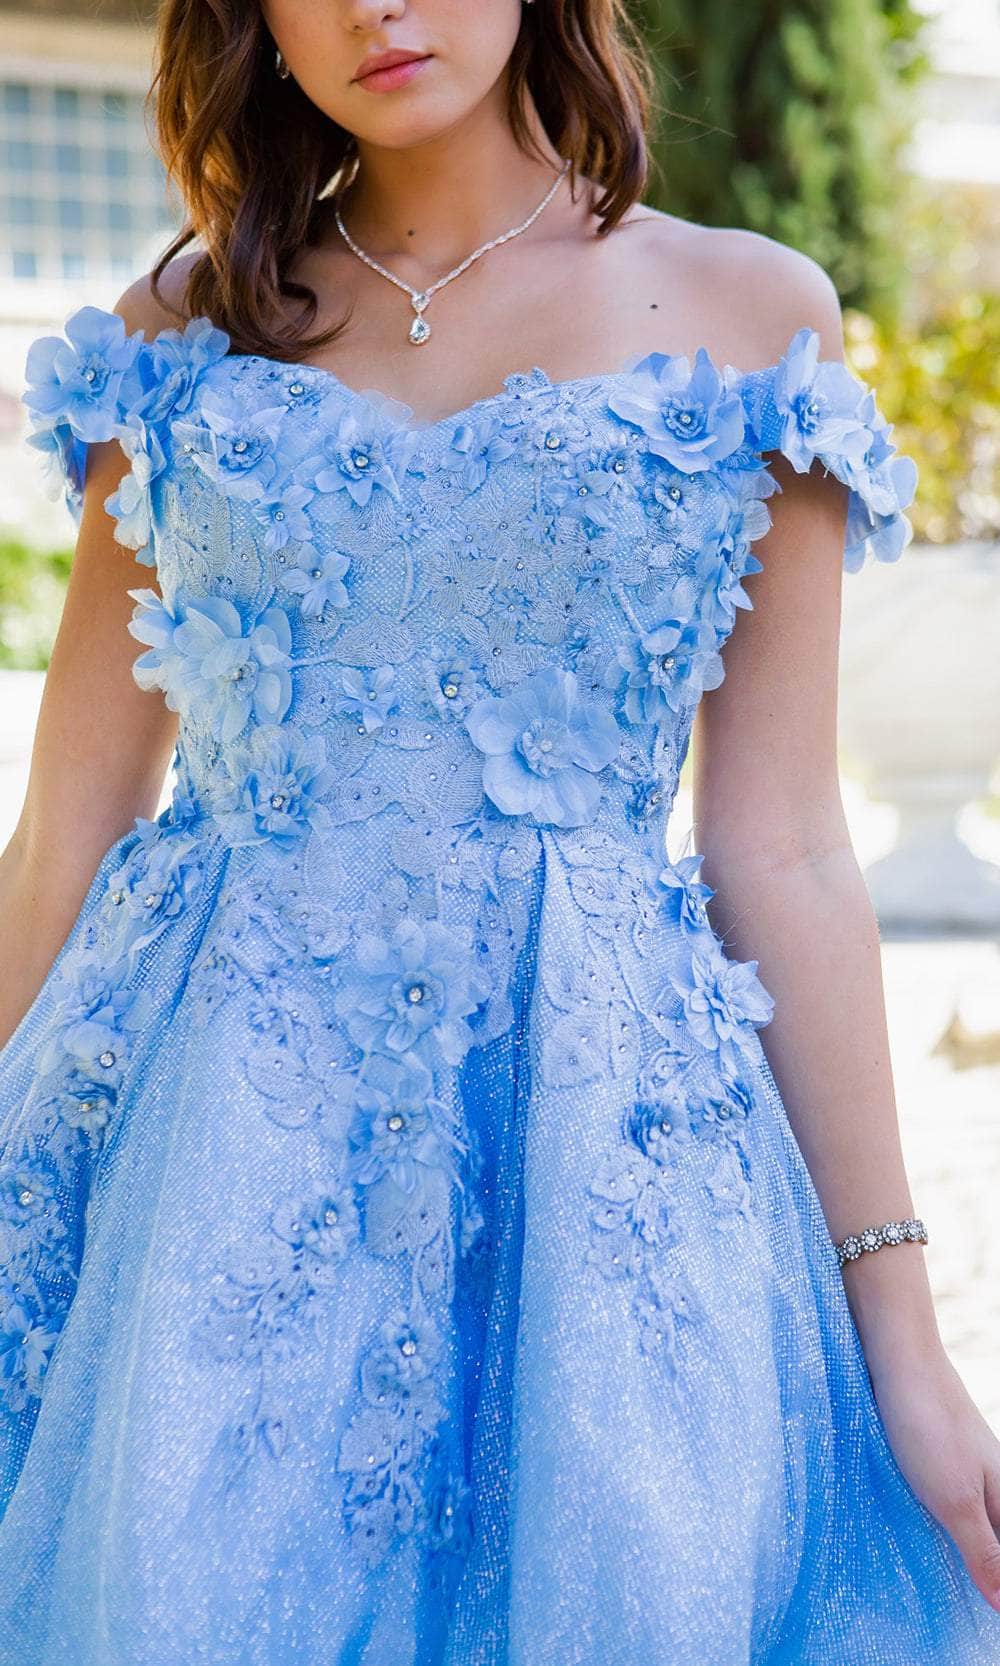 Cinderella Couture 5120J - Floral Off Shoulder Cocktail Dress Special Occasion Dress